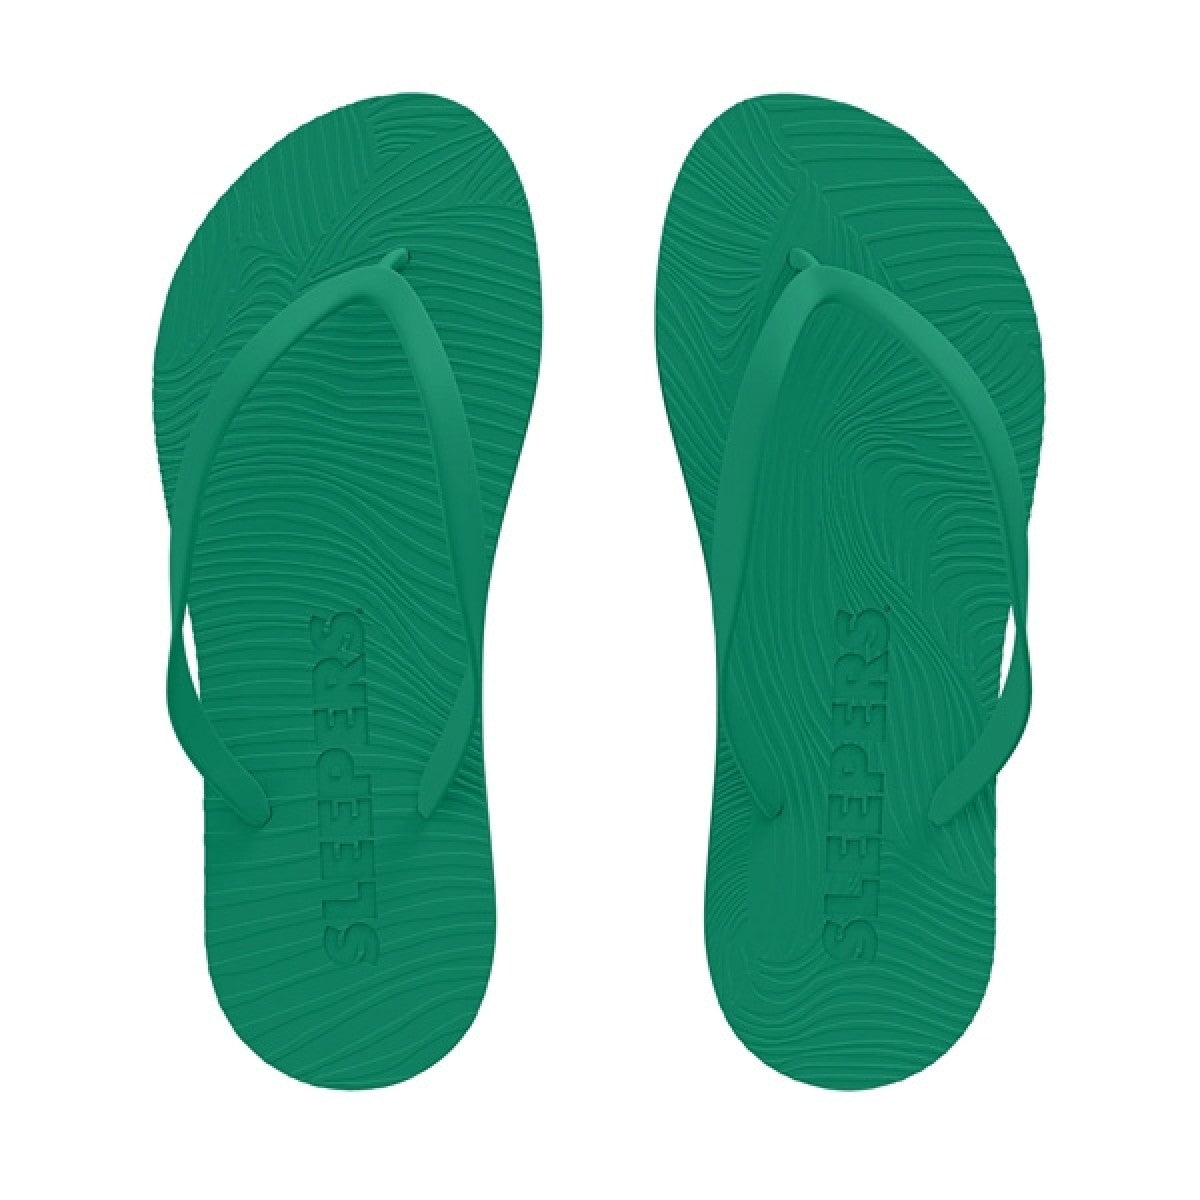 Sleepers slim Flip Flops emerald green